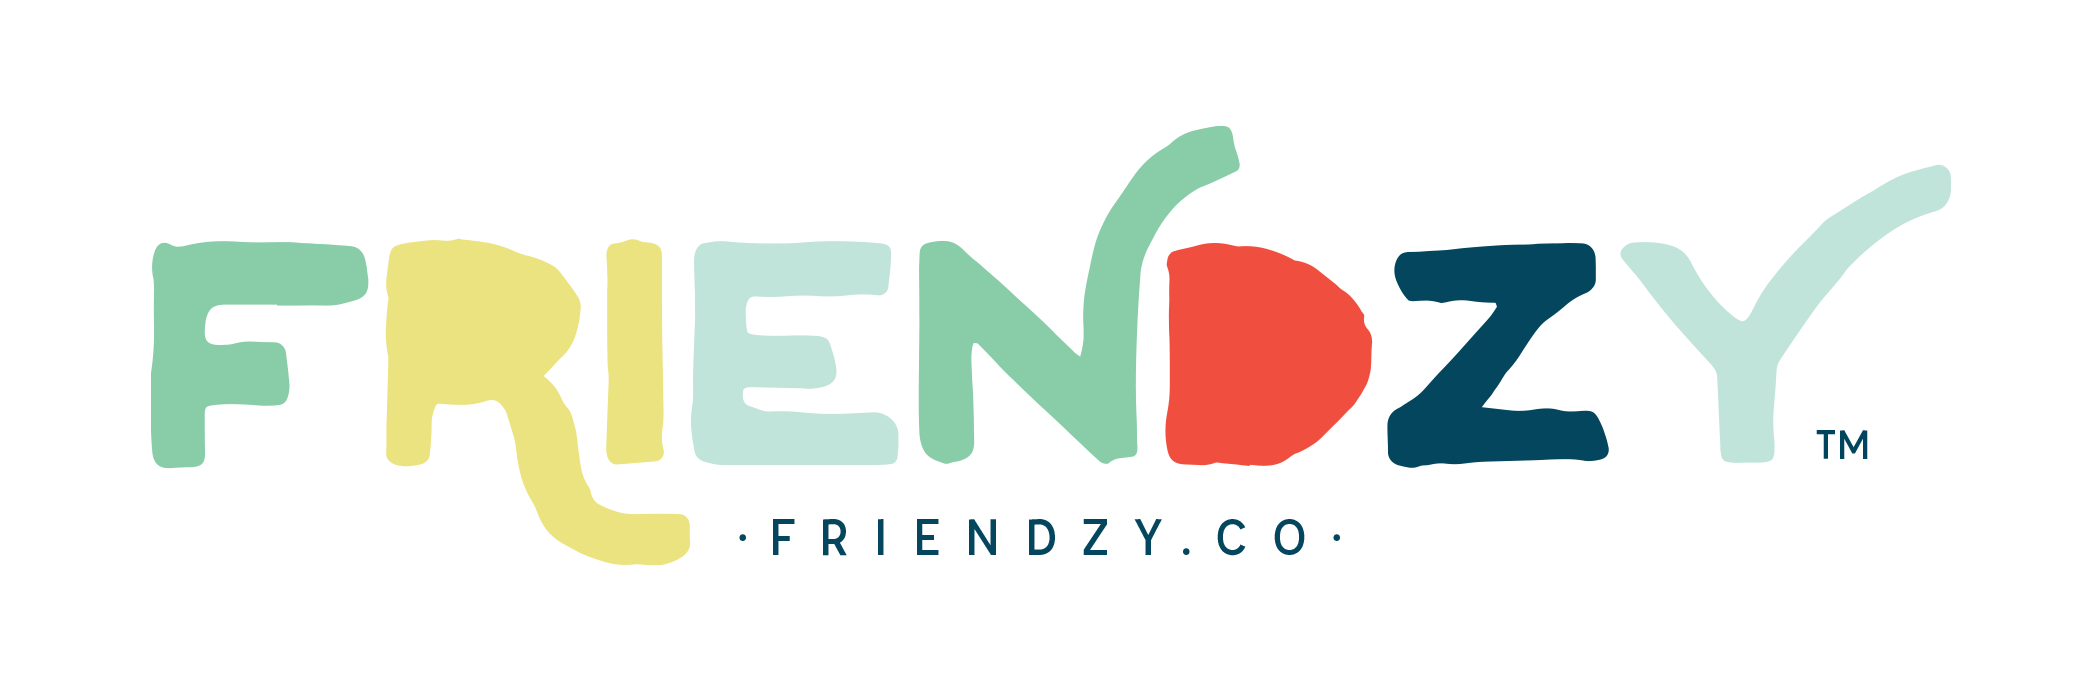 Friendzy Logo Large